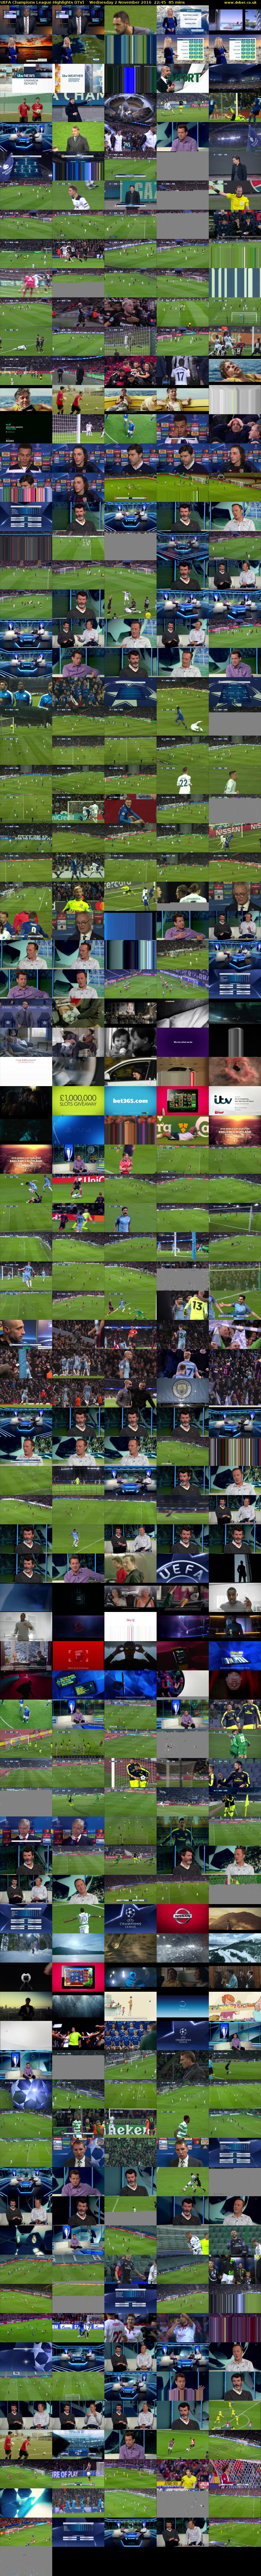 UEFA Champions League Highlights (ITV) Wednesday 2 November 2016 22:45 - 00:10